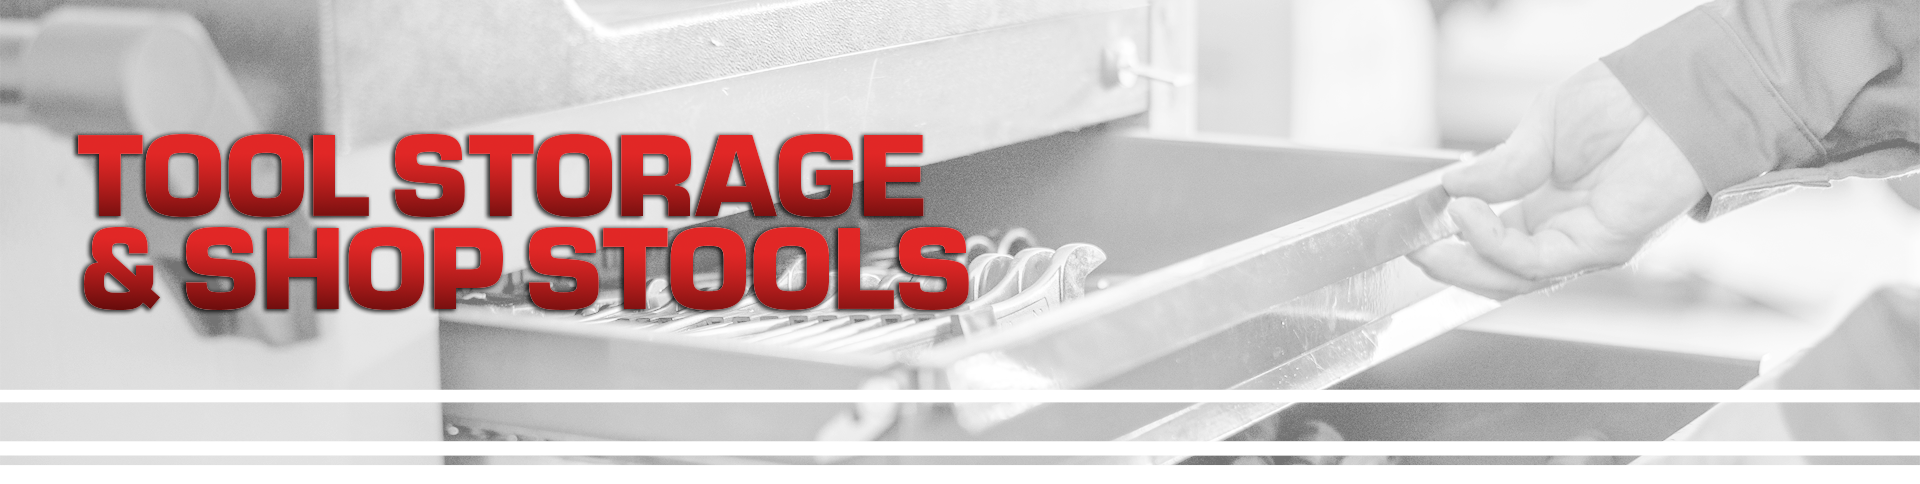 Tool Storage & Shop Stools